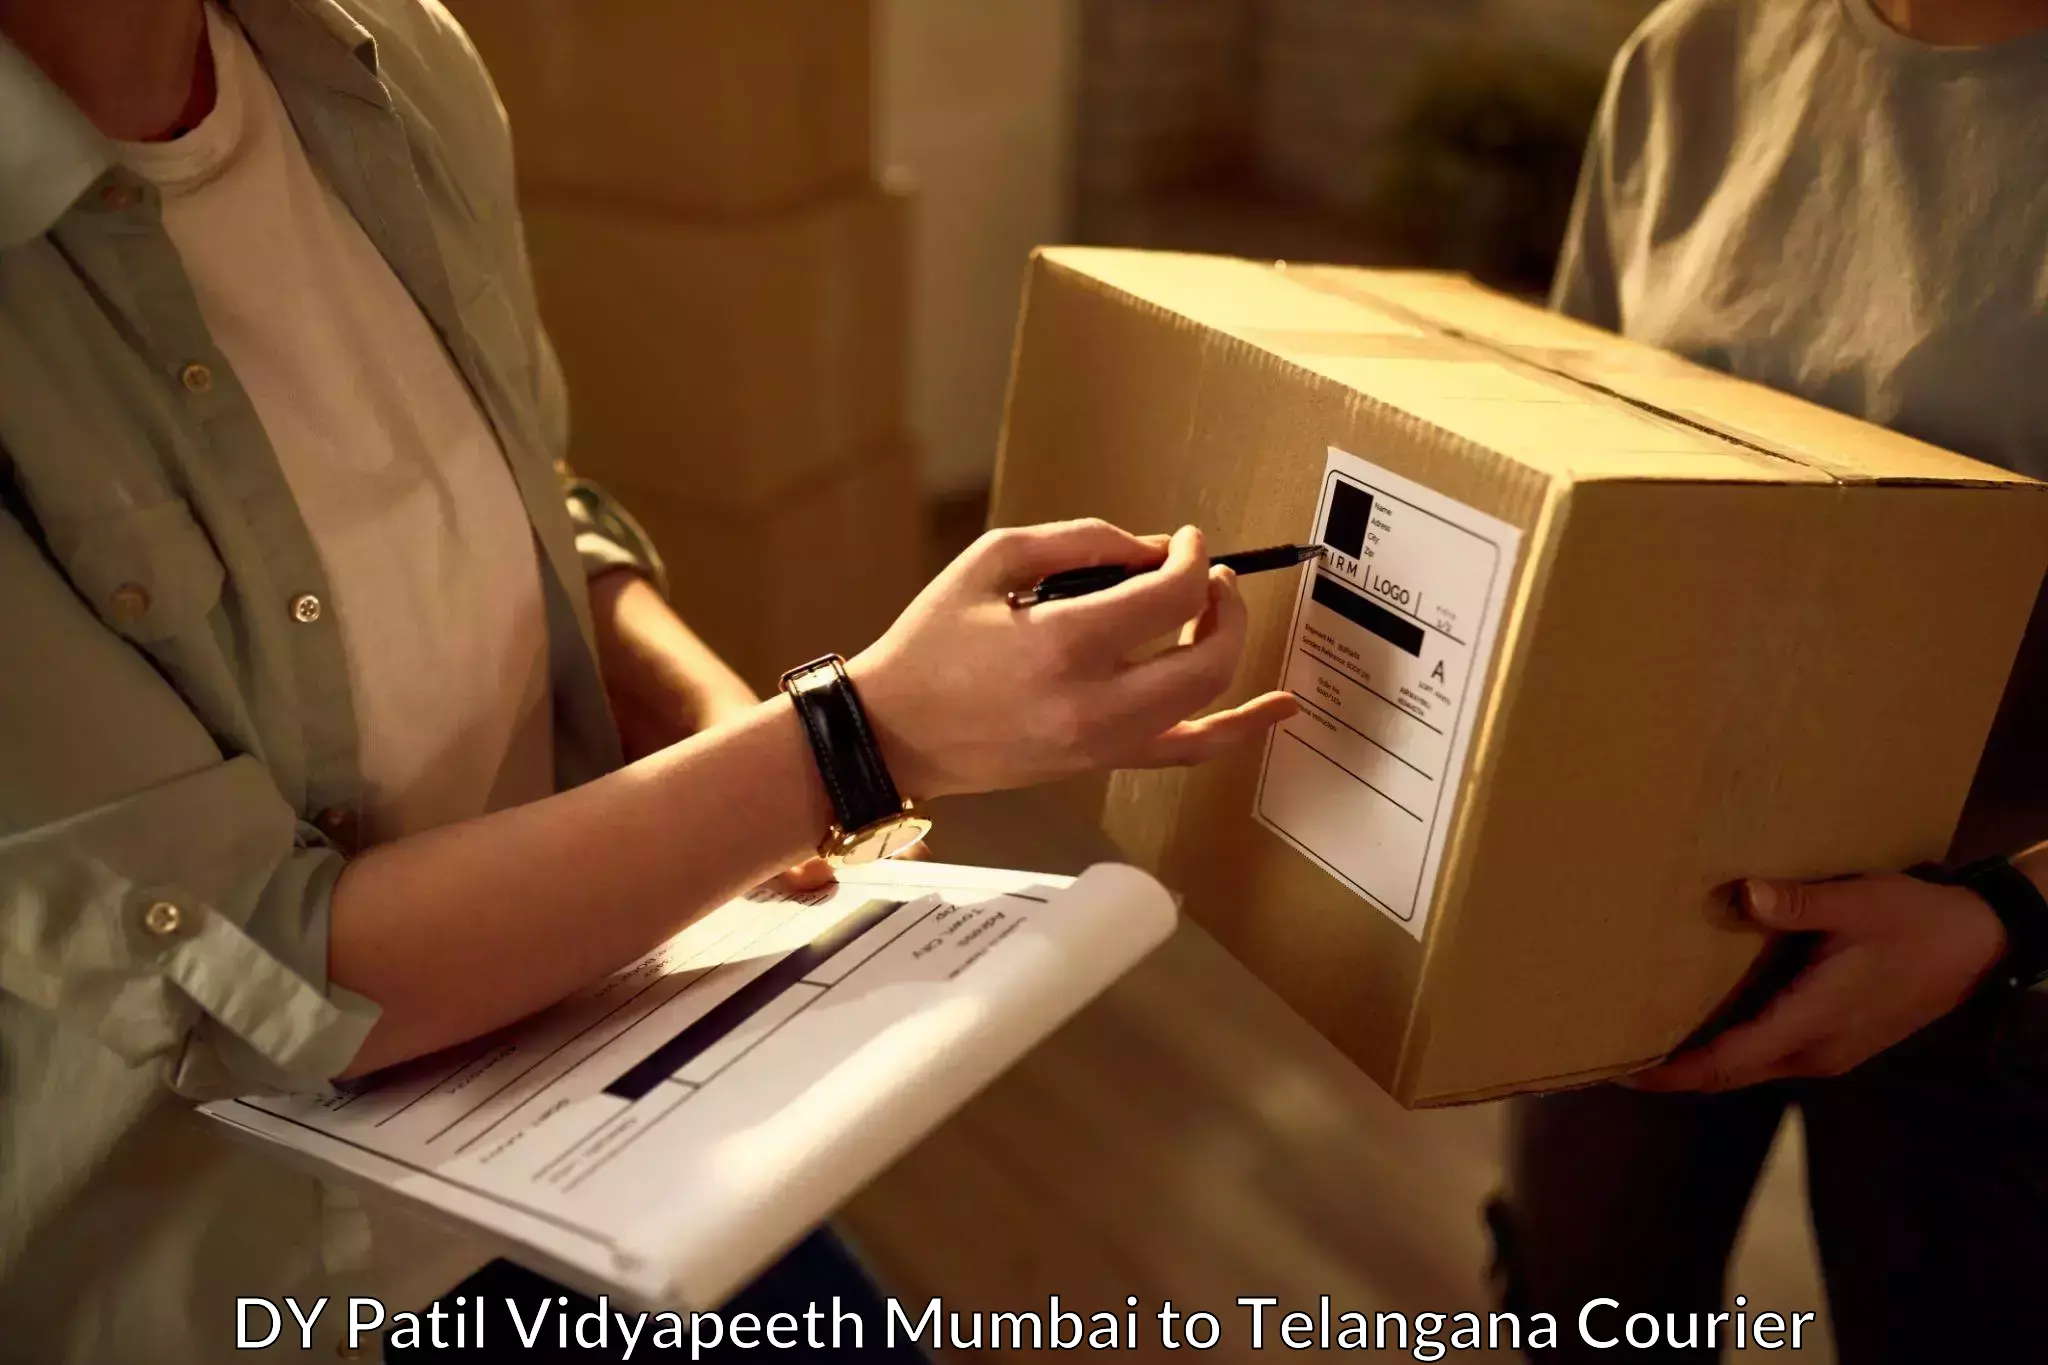 Individual parcel service DY Patil Vidyapeeth Mumbai to Chennur